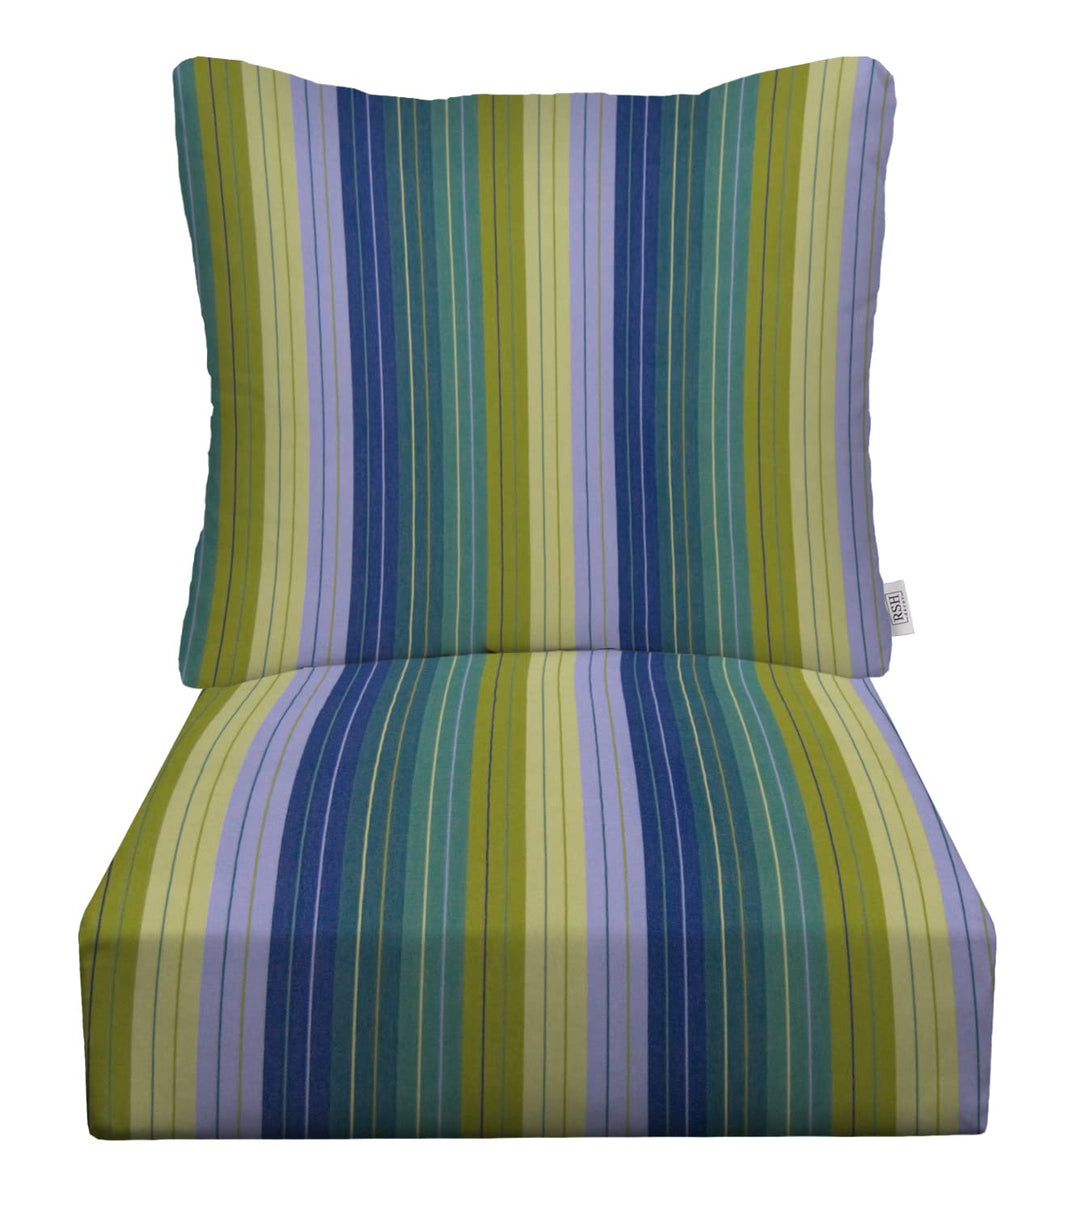 Deep Seating Pillow Back Chair Cushion Set, 24" x 24" x 5" Seat and 25" x 21" Back, Sunbrella Patterns - RSH Decor